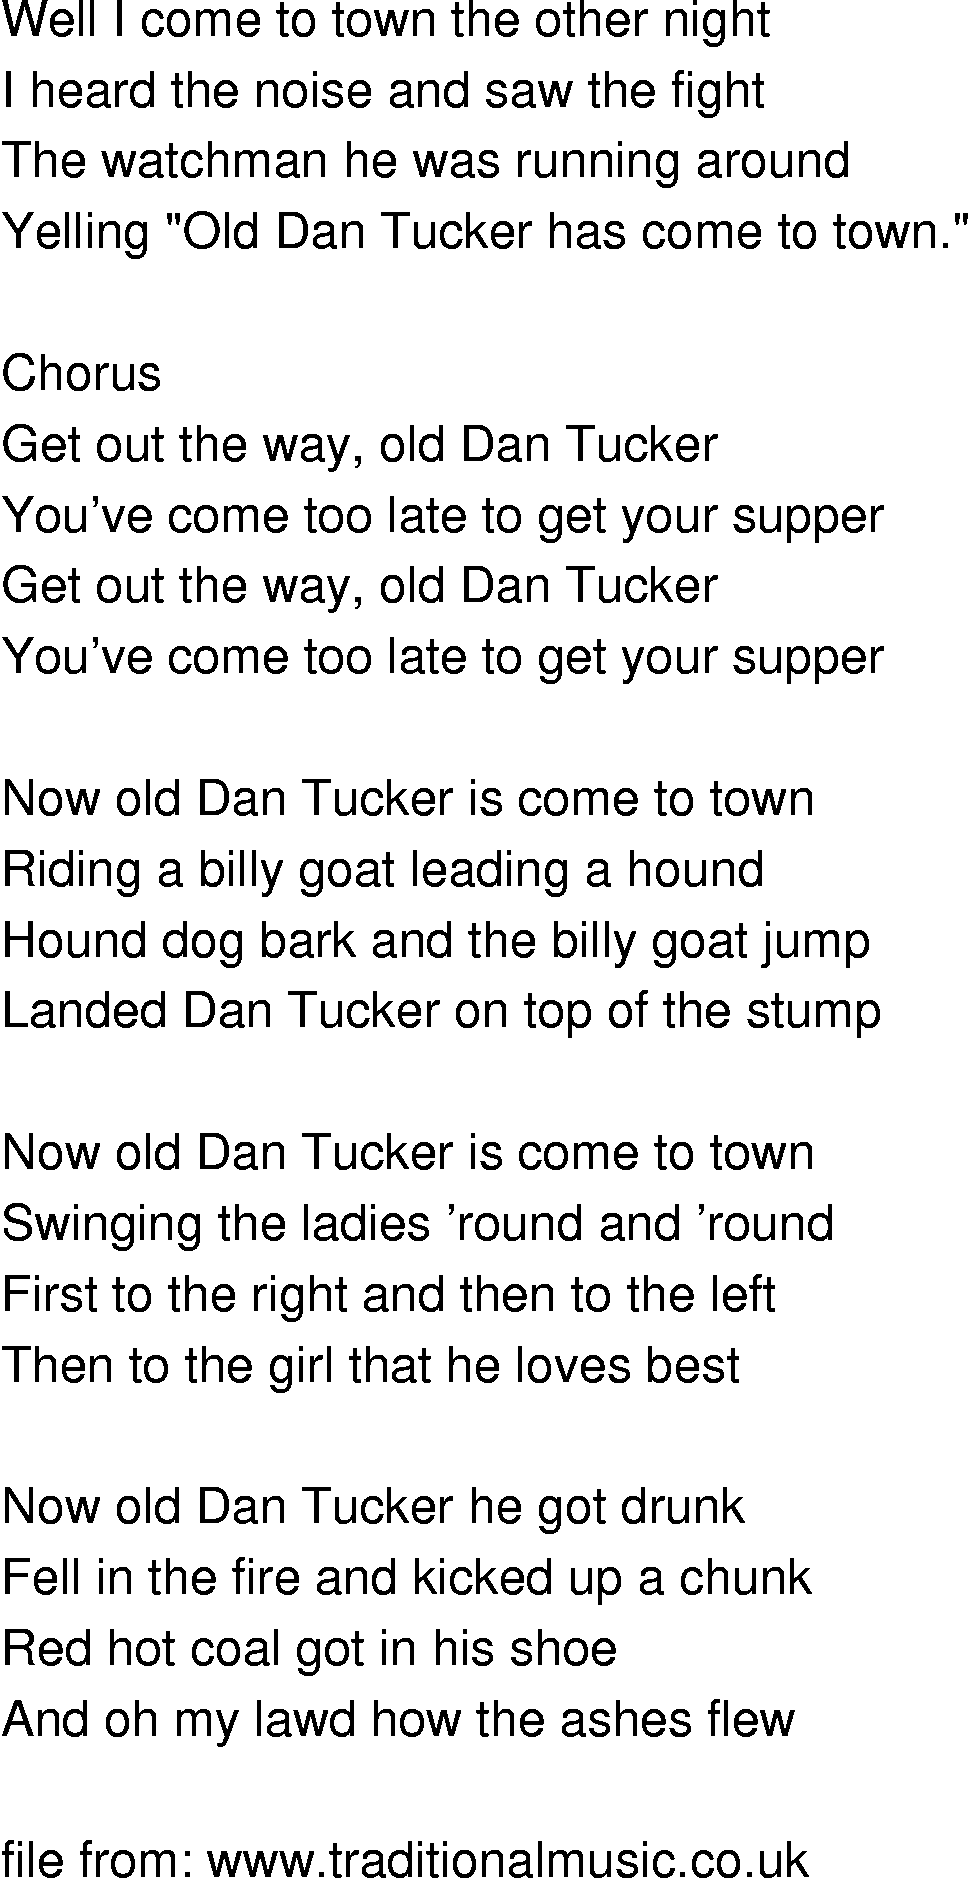 Old-Time (oldtimey) Song Lyrics - old dan tucker